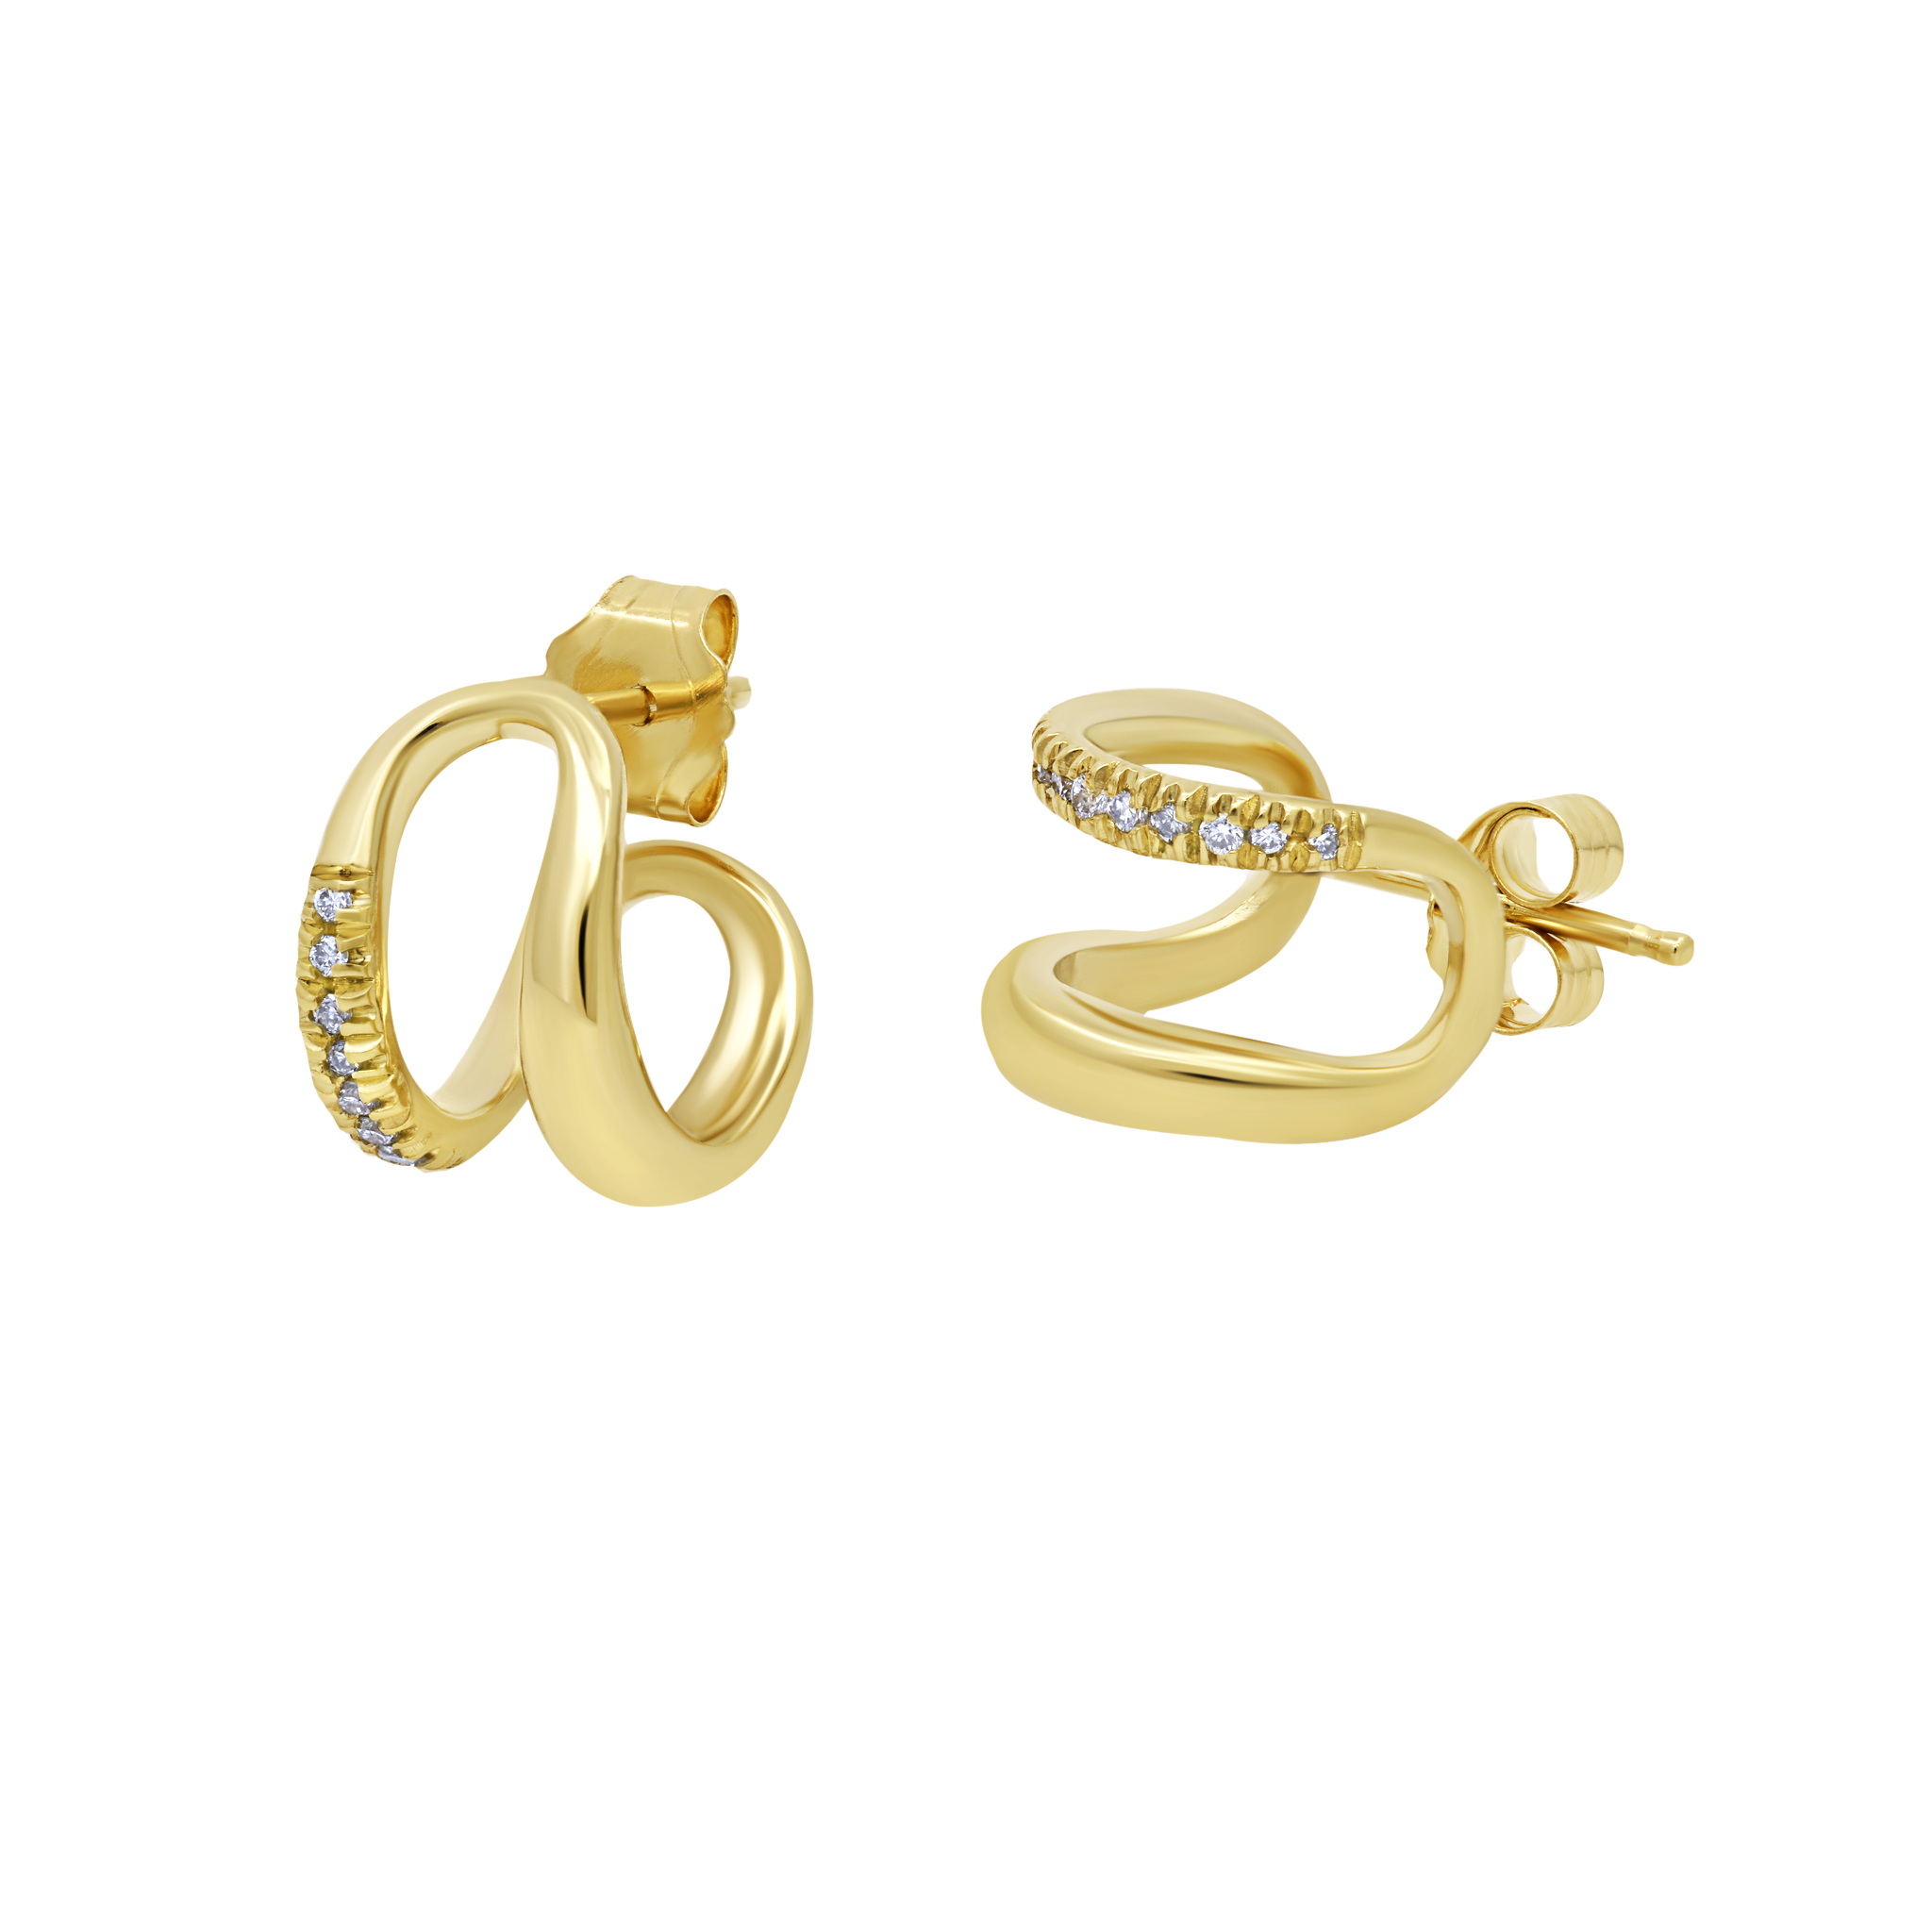 Twin Tusk Earrings with White Pavé Diamonds - Gabriela Artigas